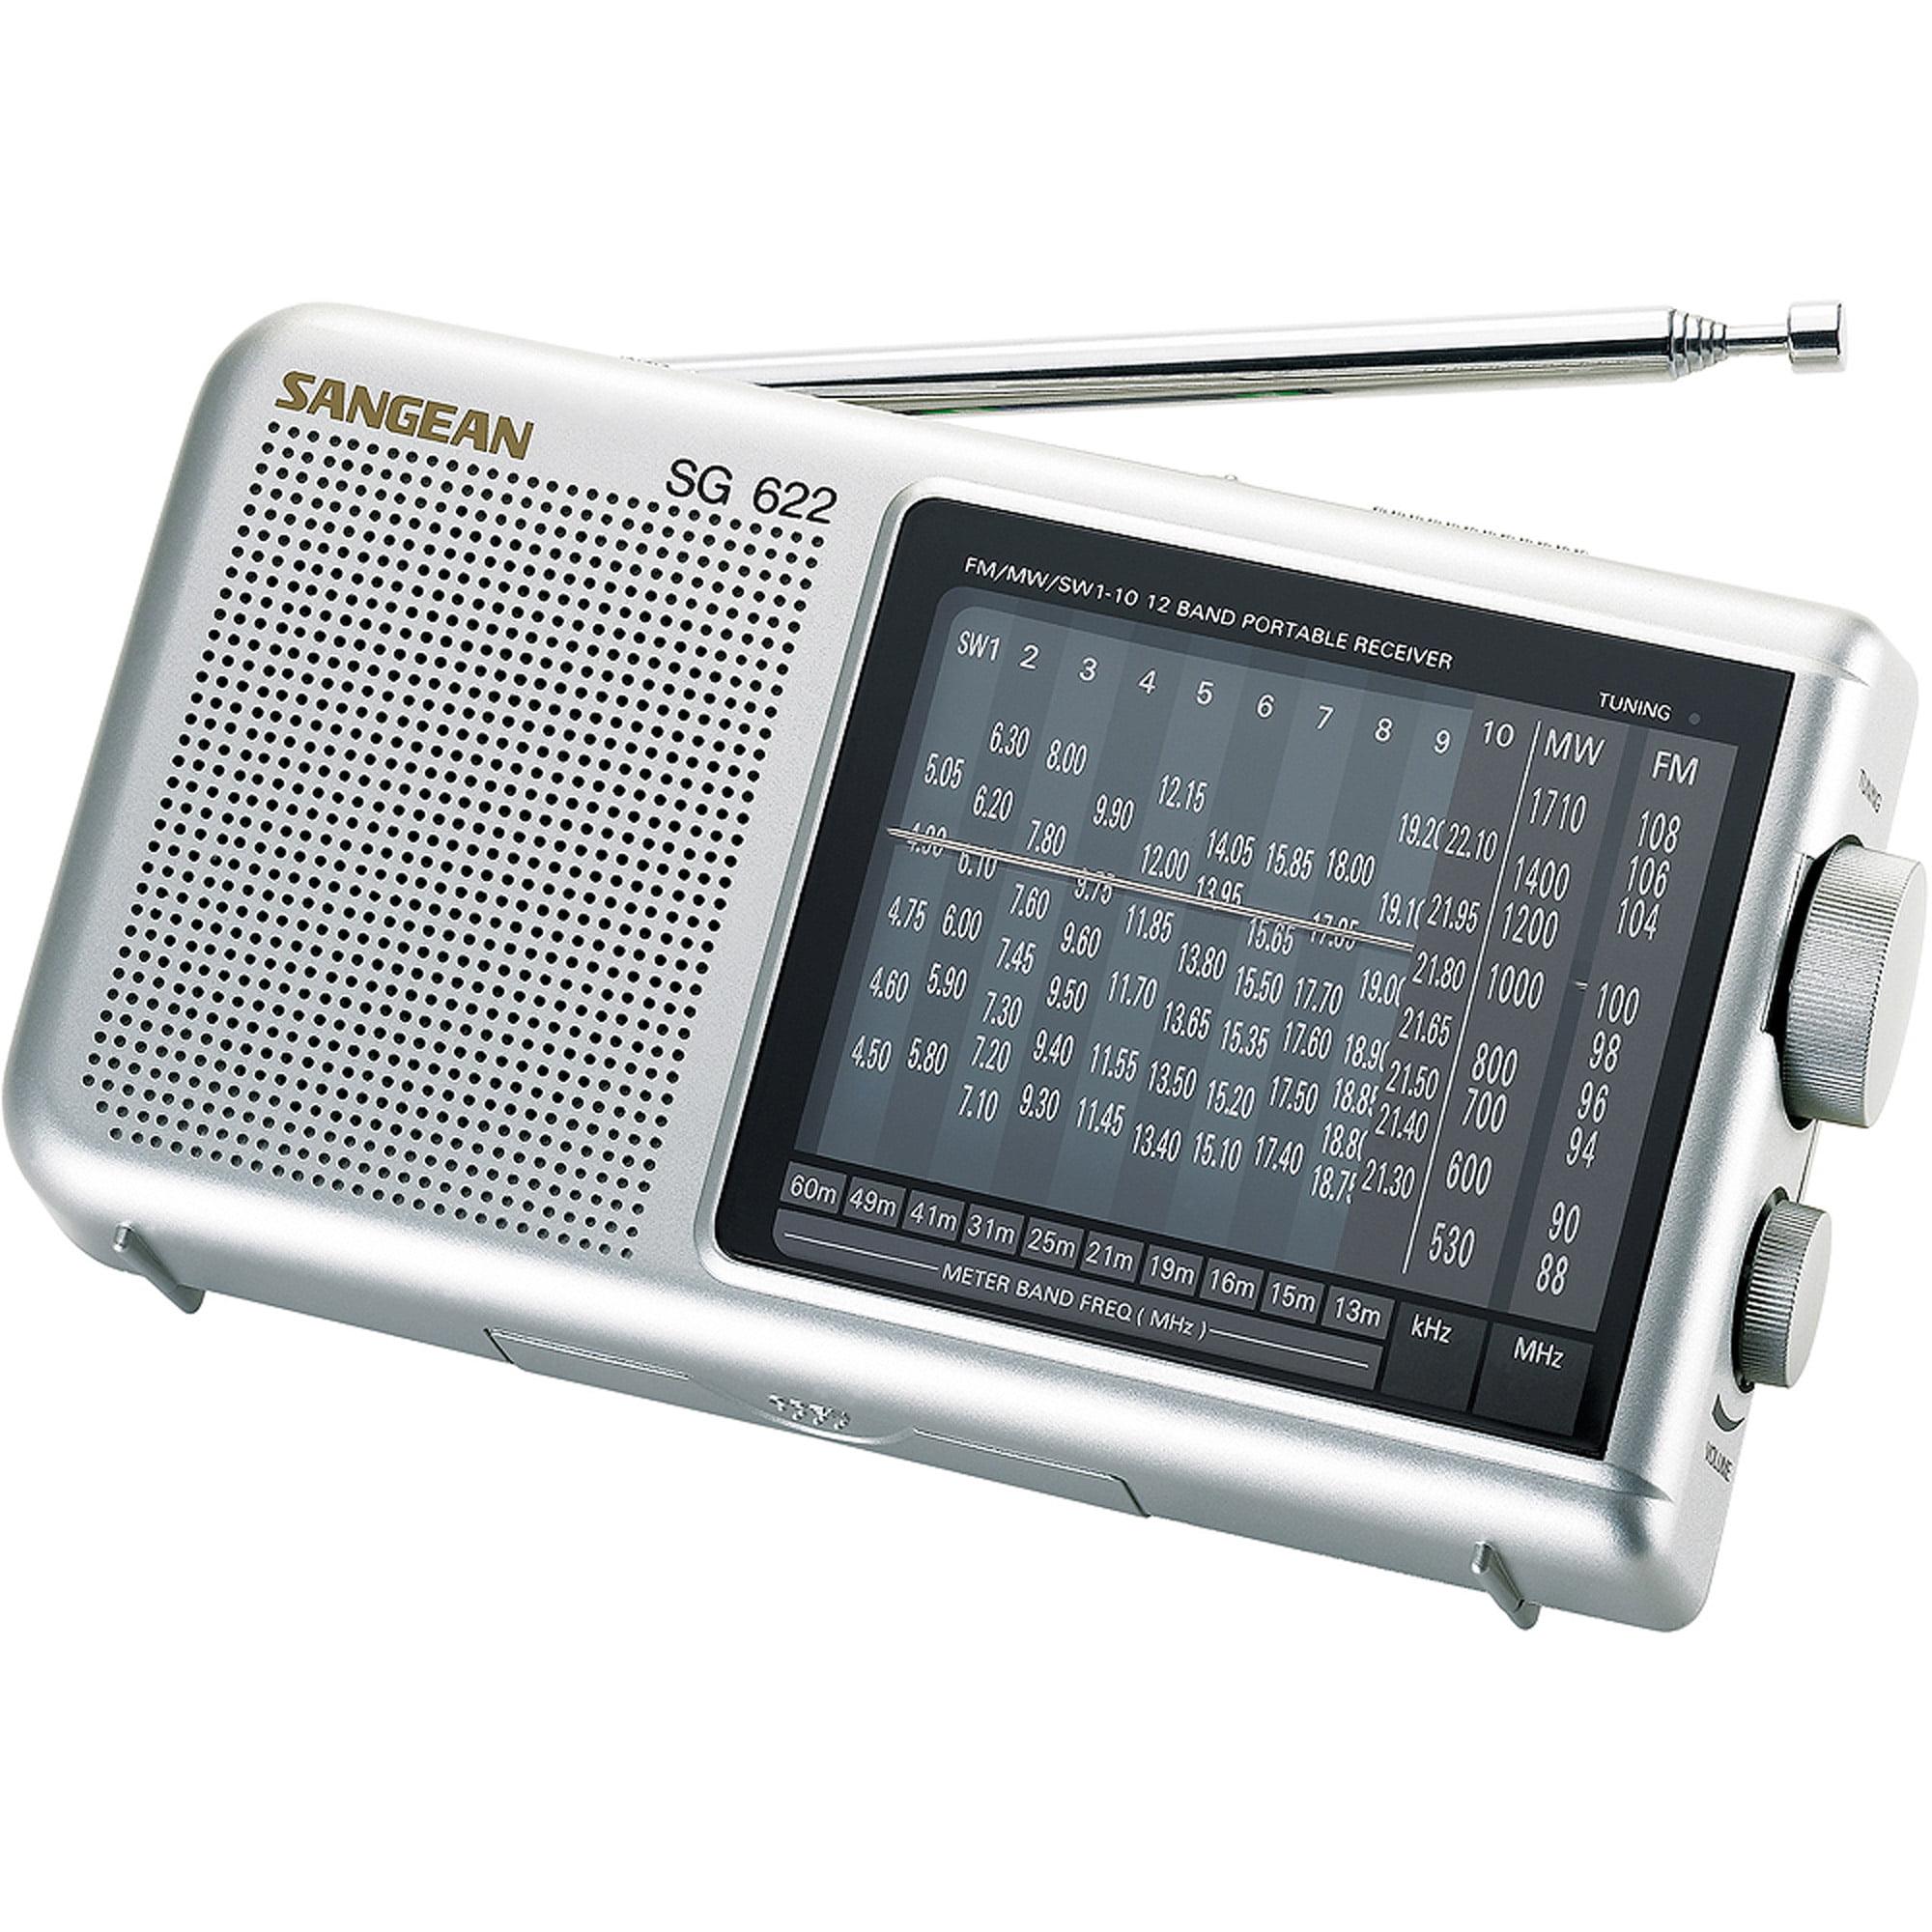 36 X Fm 36 X Sw Presetslcd Display Sangean Ats-405 Radio Tuner 36 X Am